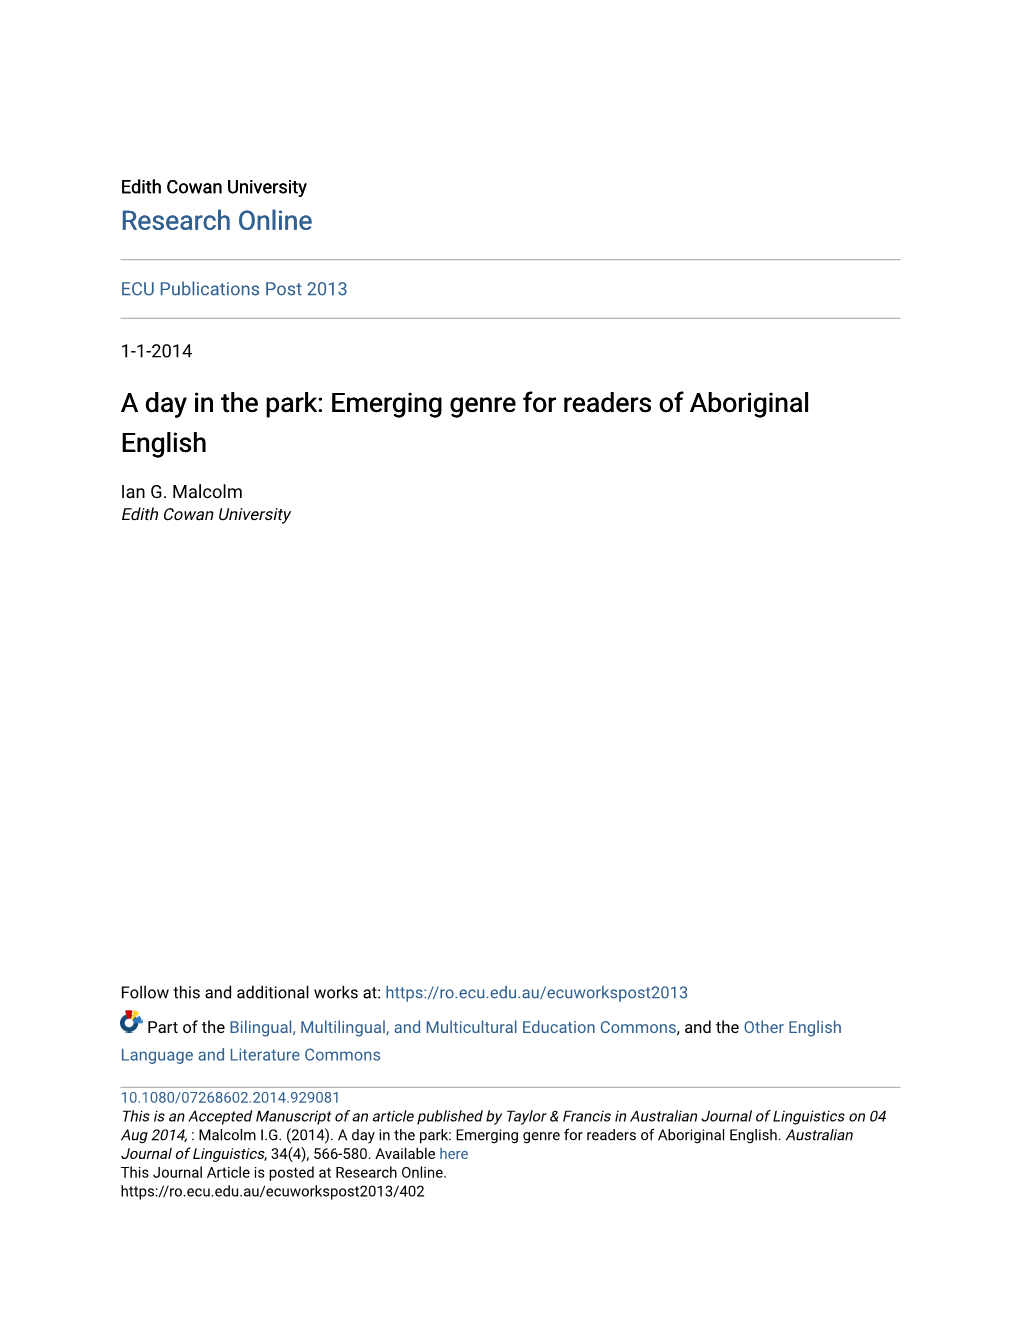 Emerging Genre for Readers of Aboriginal English